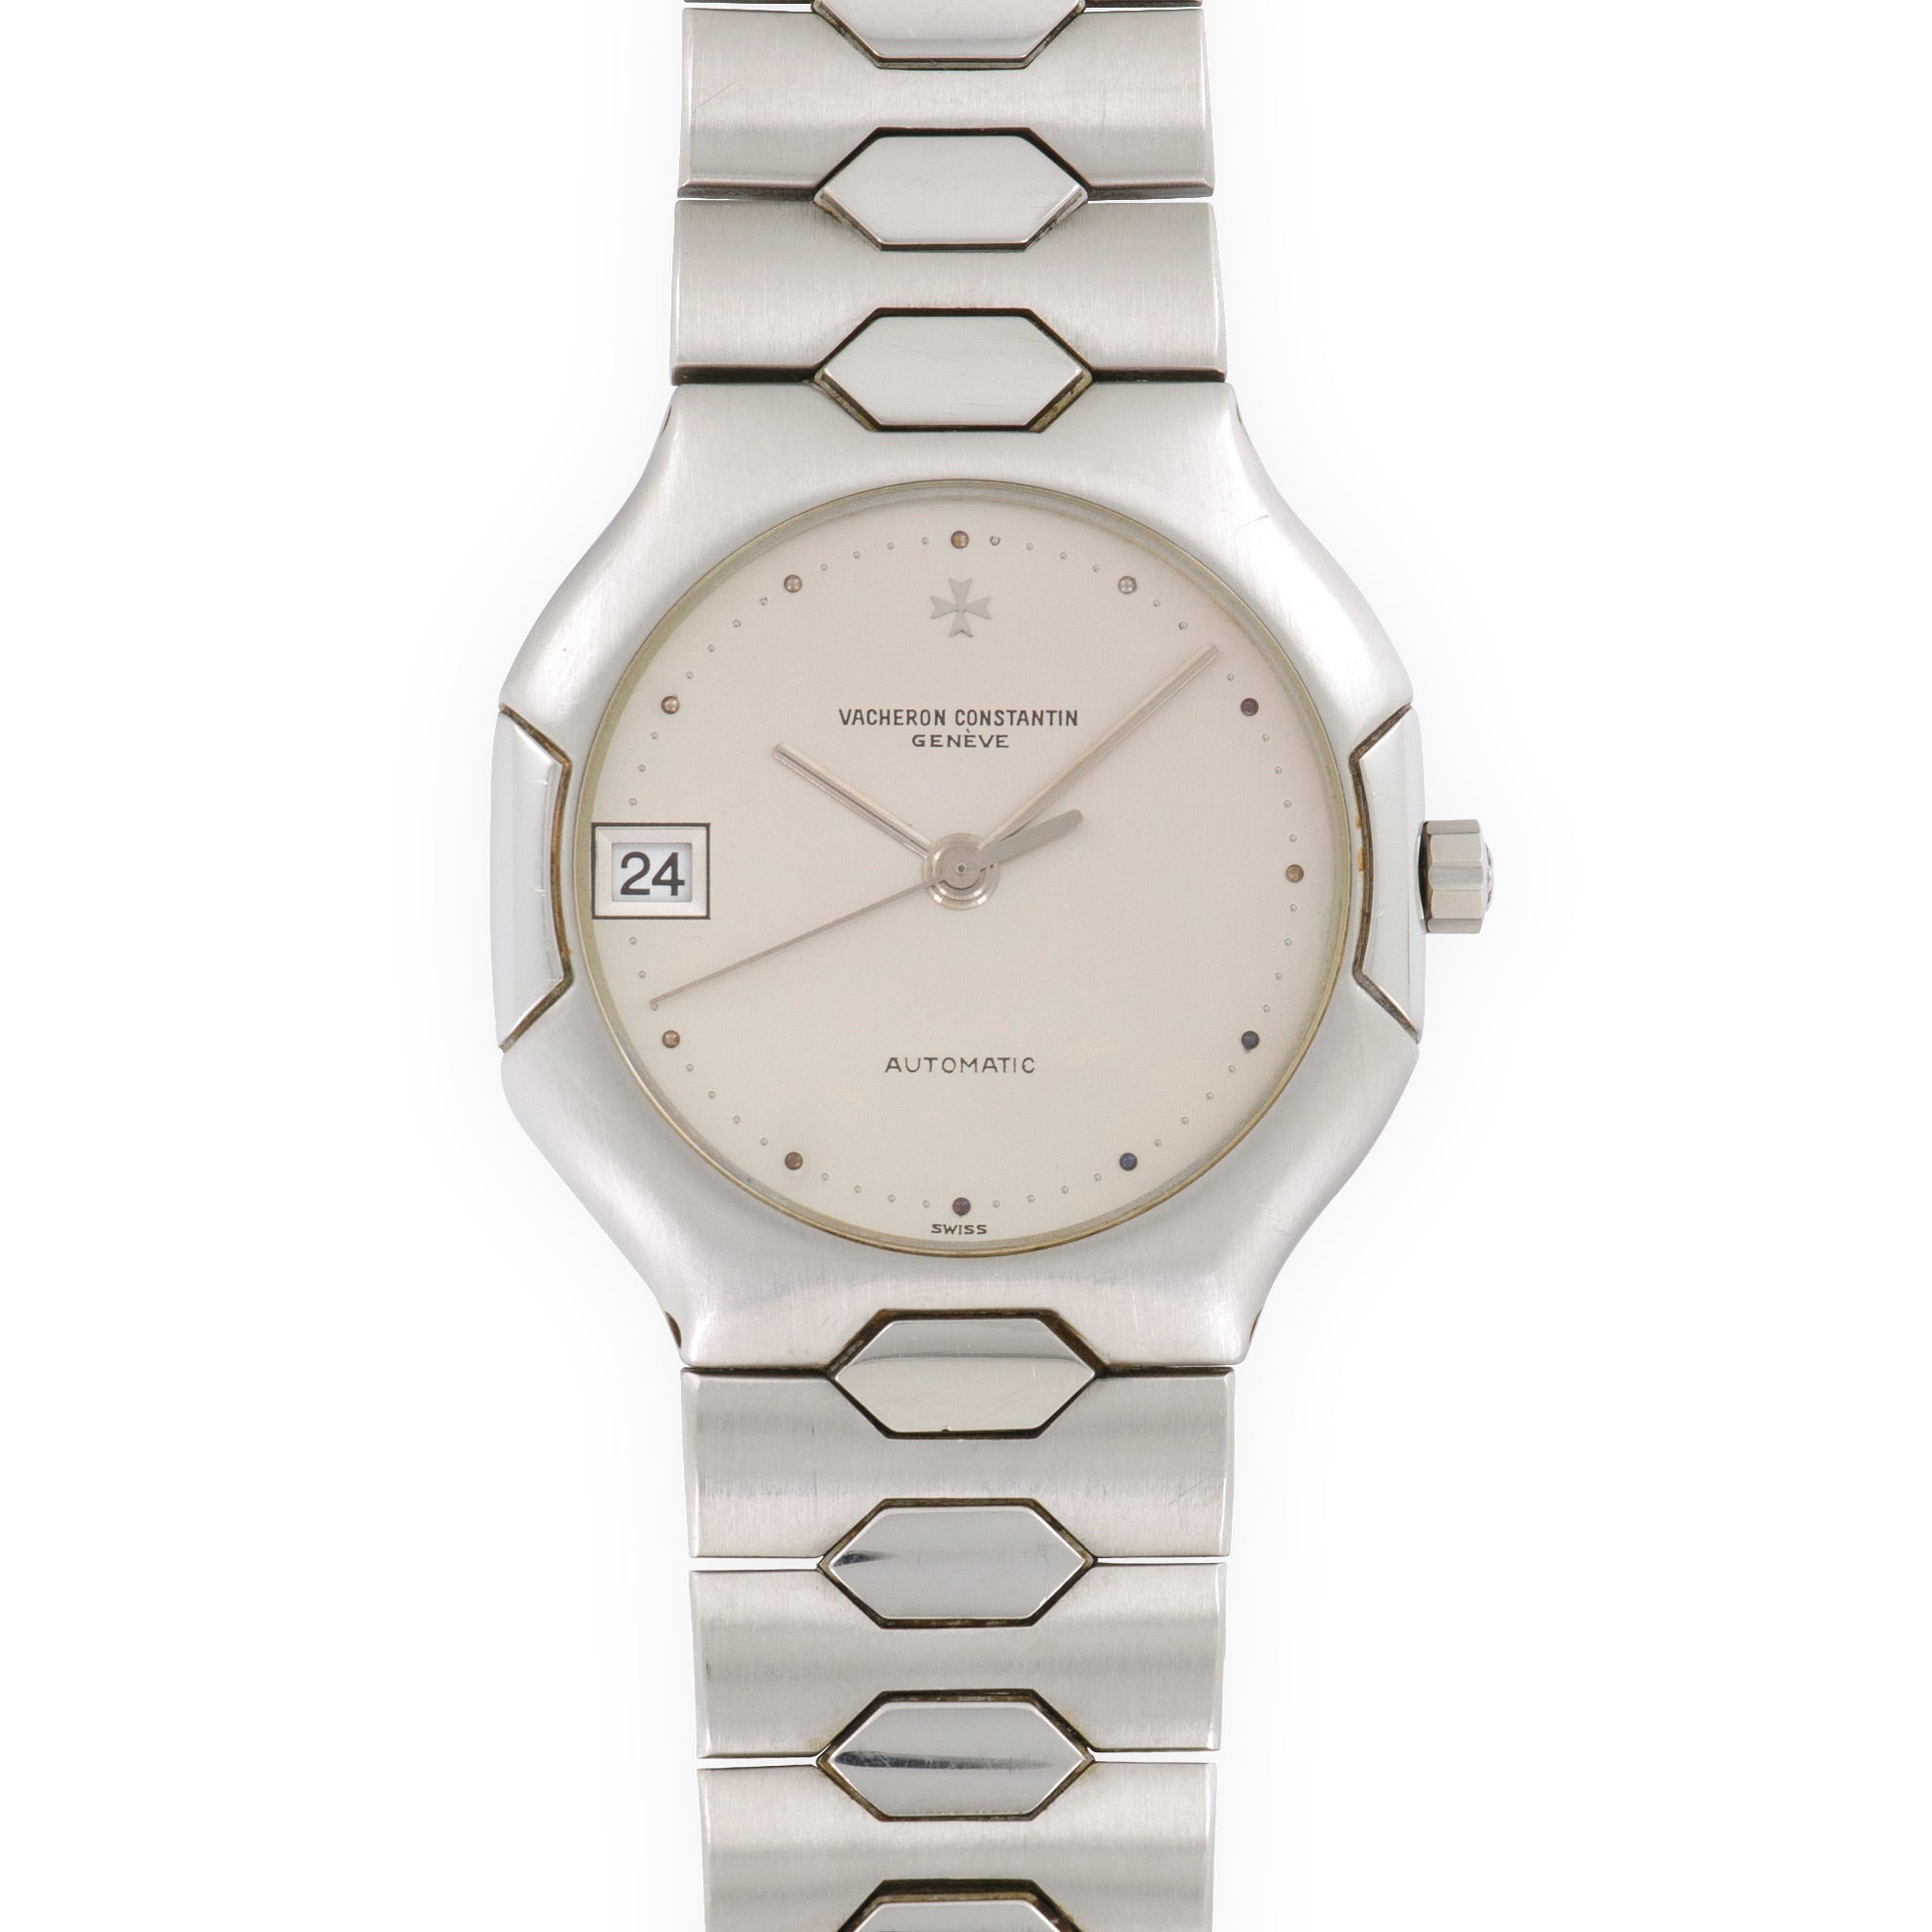 Vacheron Constantin - Vacheron Constantin Steel Automatic Watch - The Keystone Watches